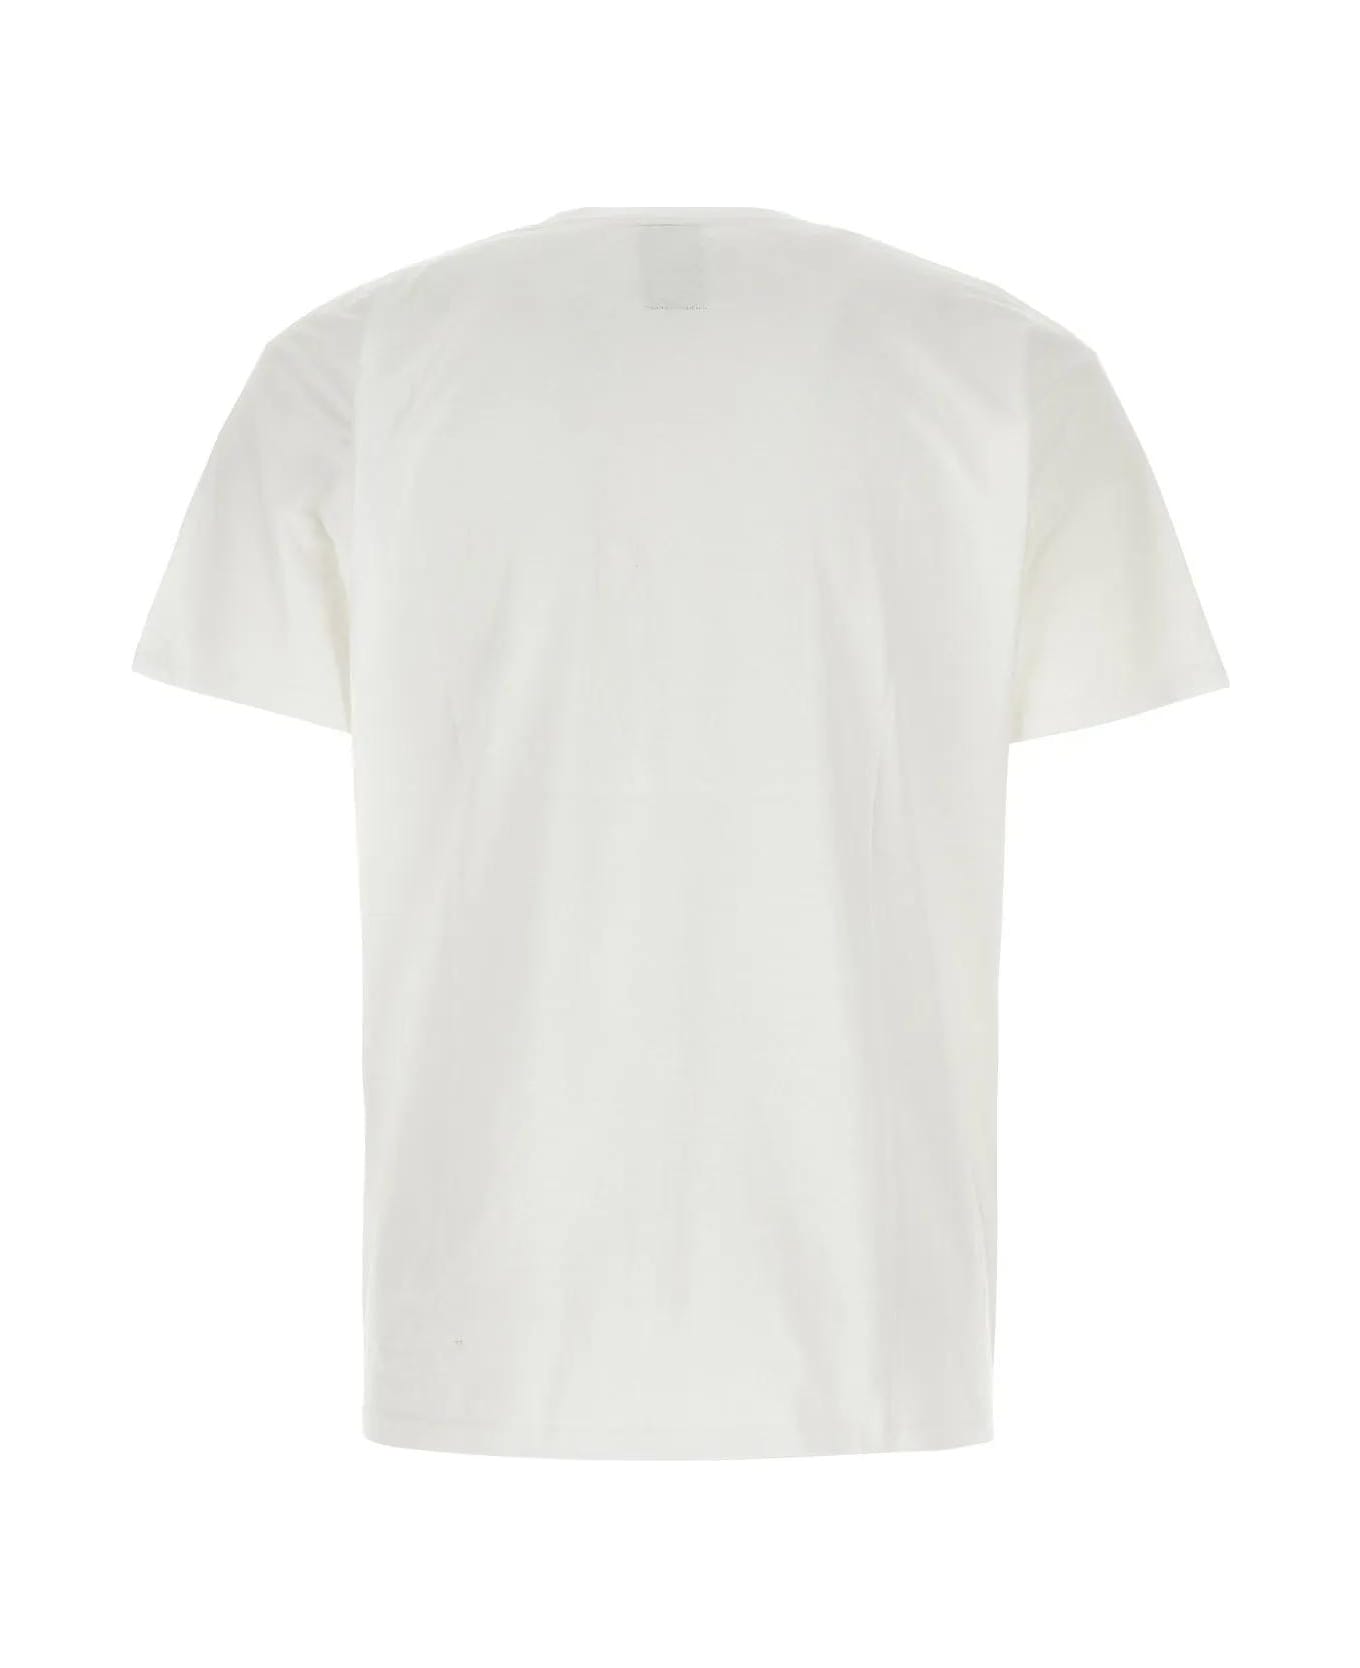 Wild Donkey White Cotton T-shirt - White シャツ